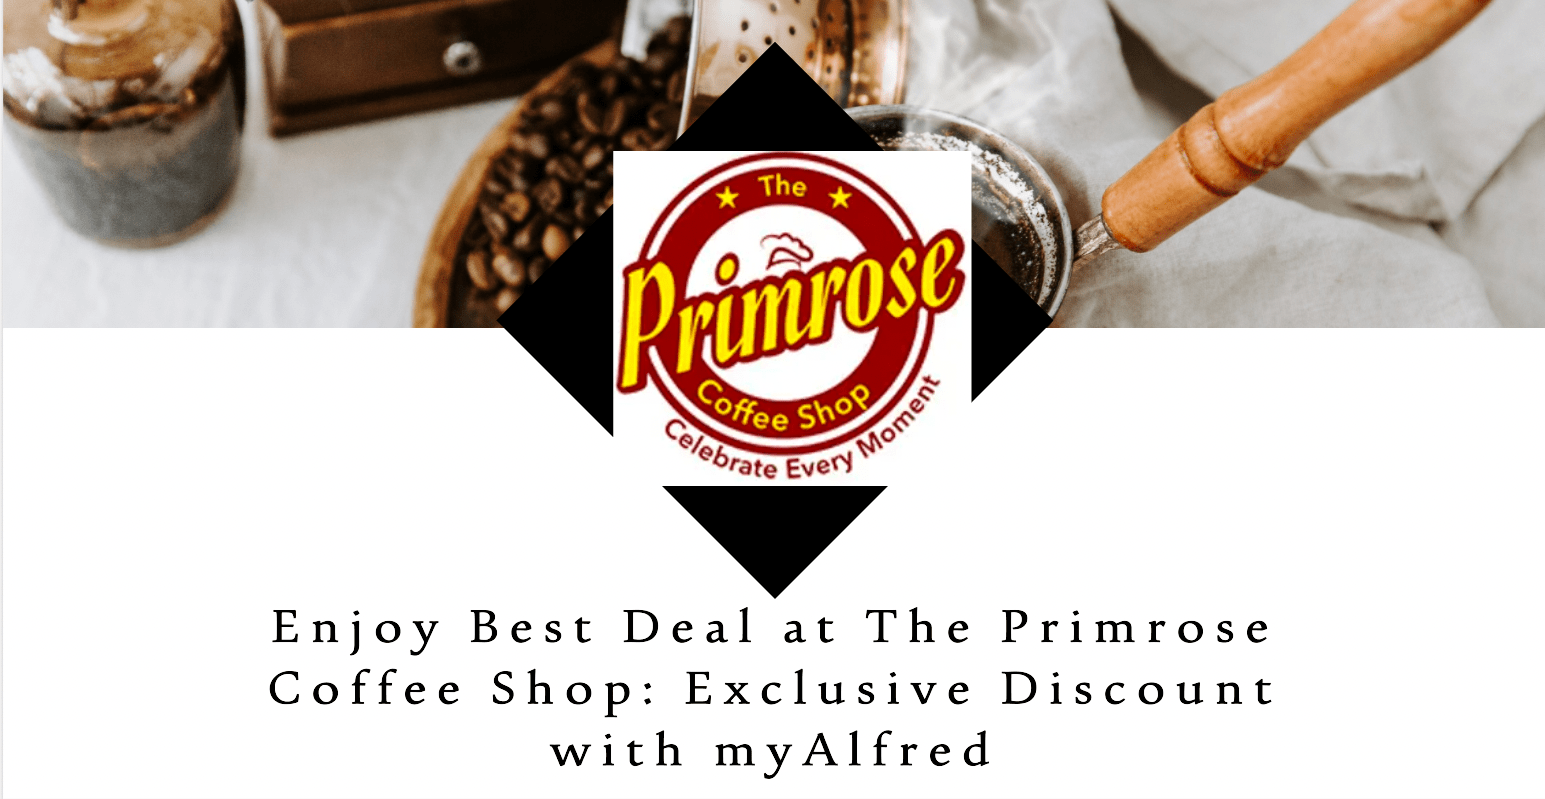 The Primrose Coffee Shop